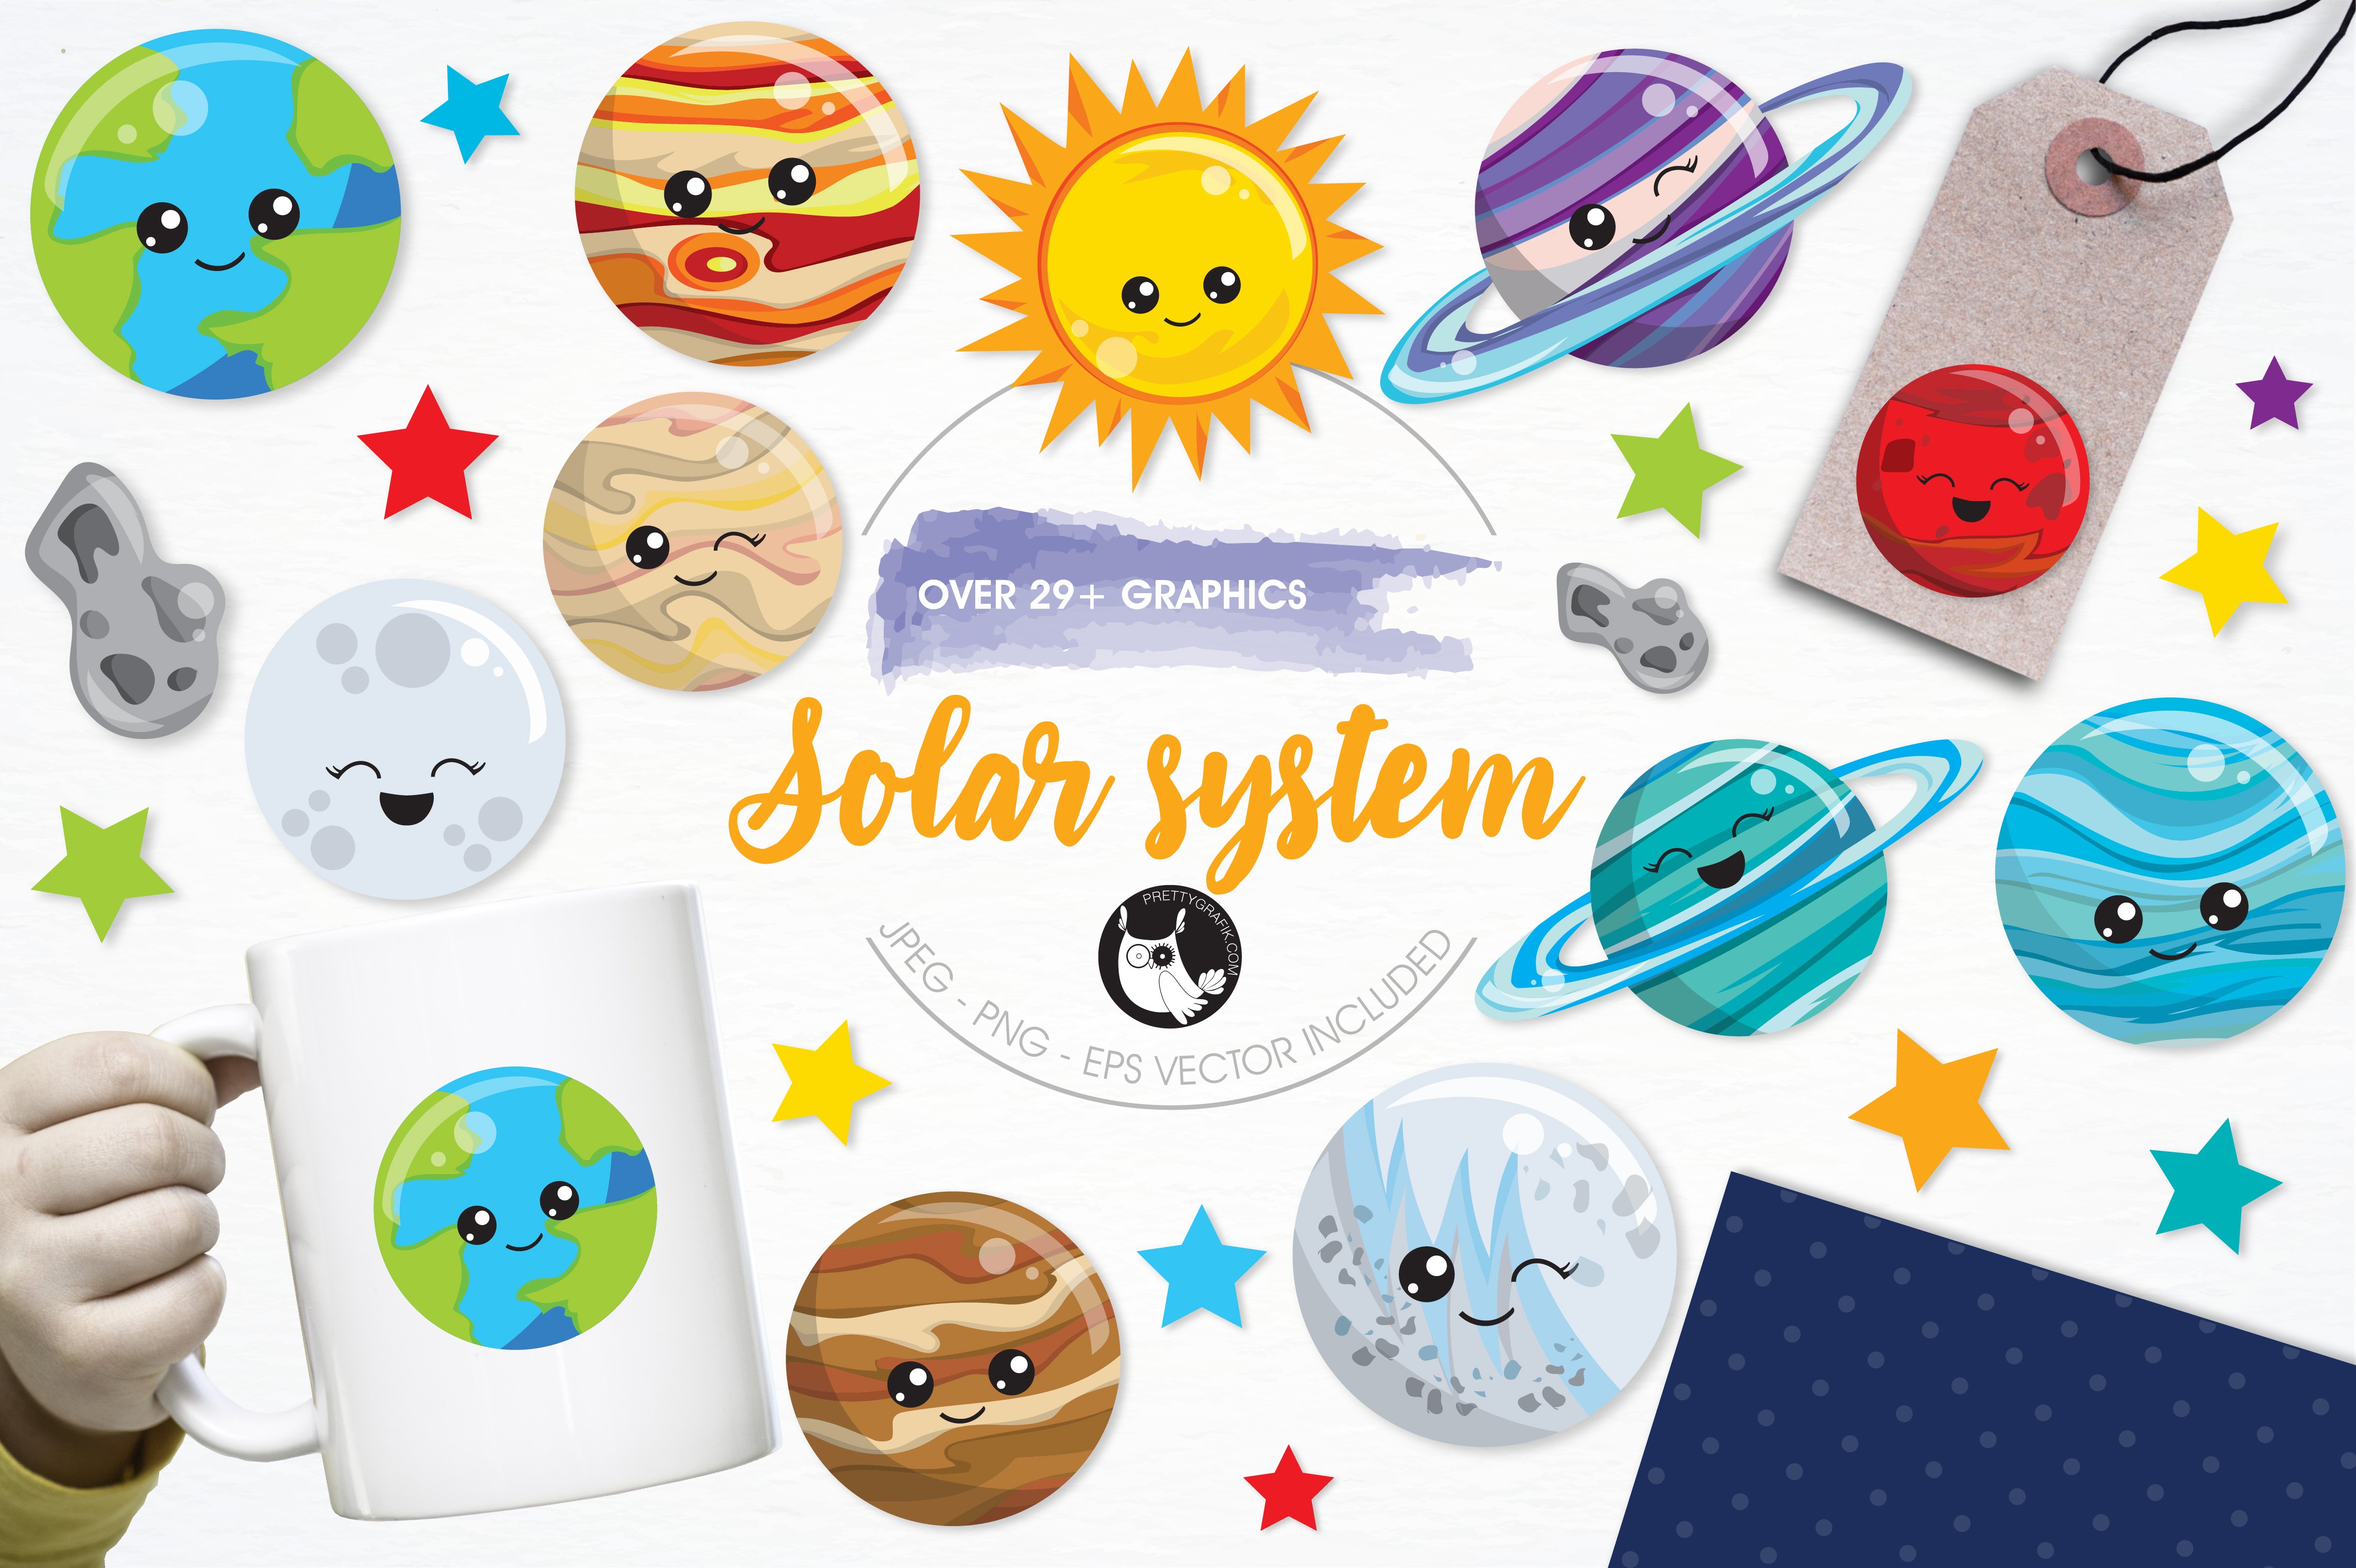 Solar system illustration pack - Vector Image